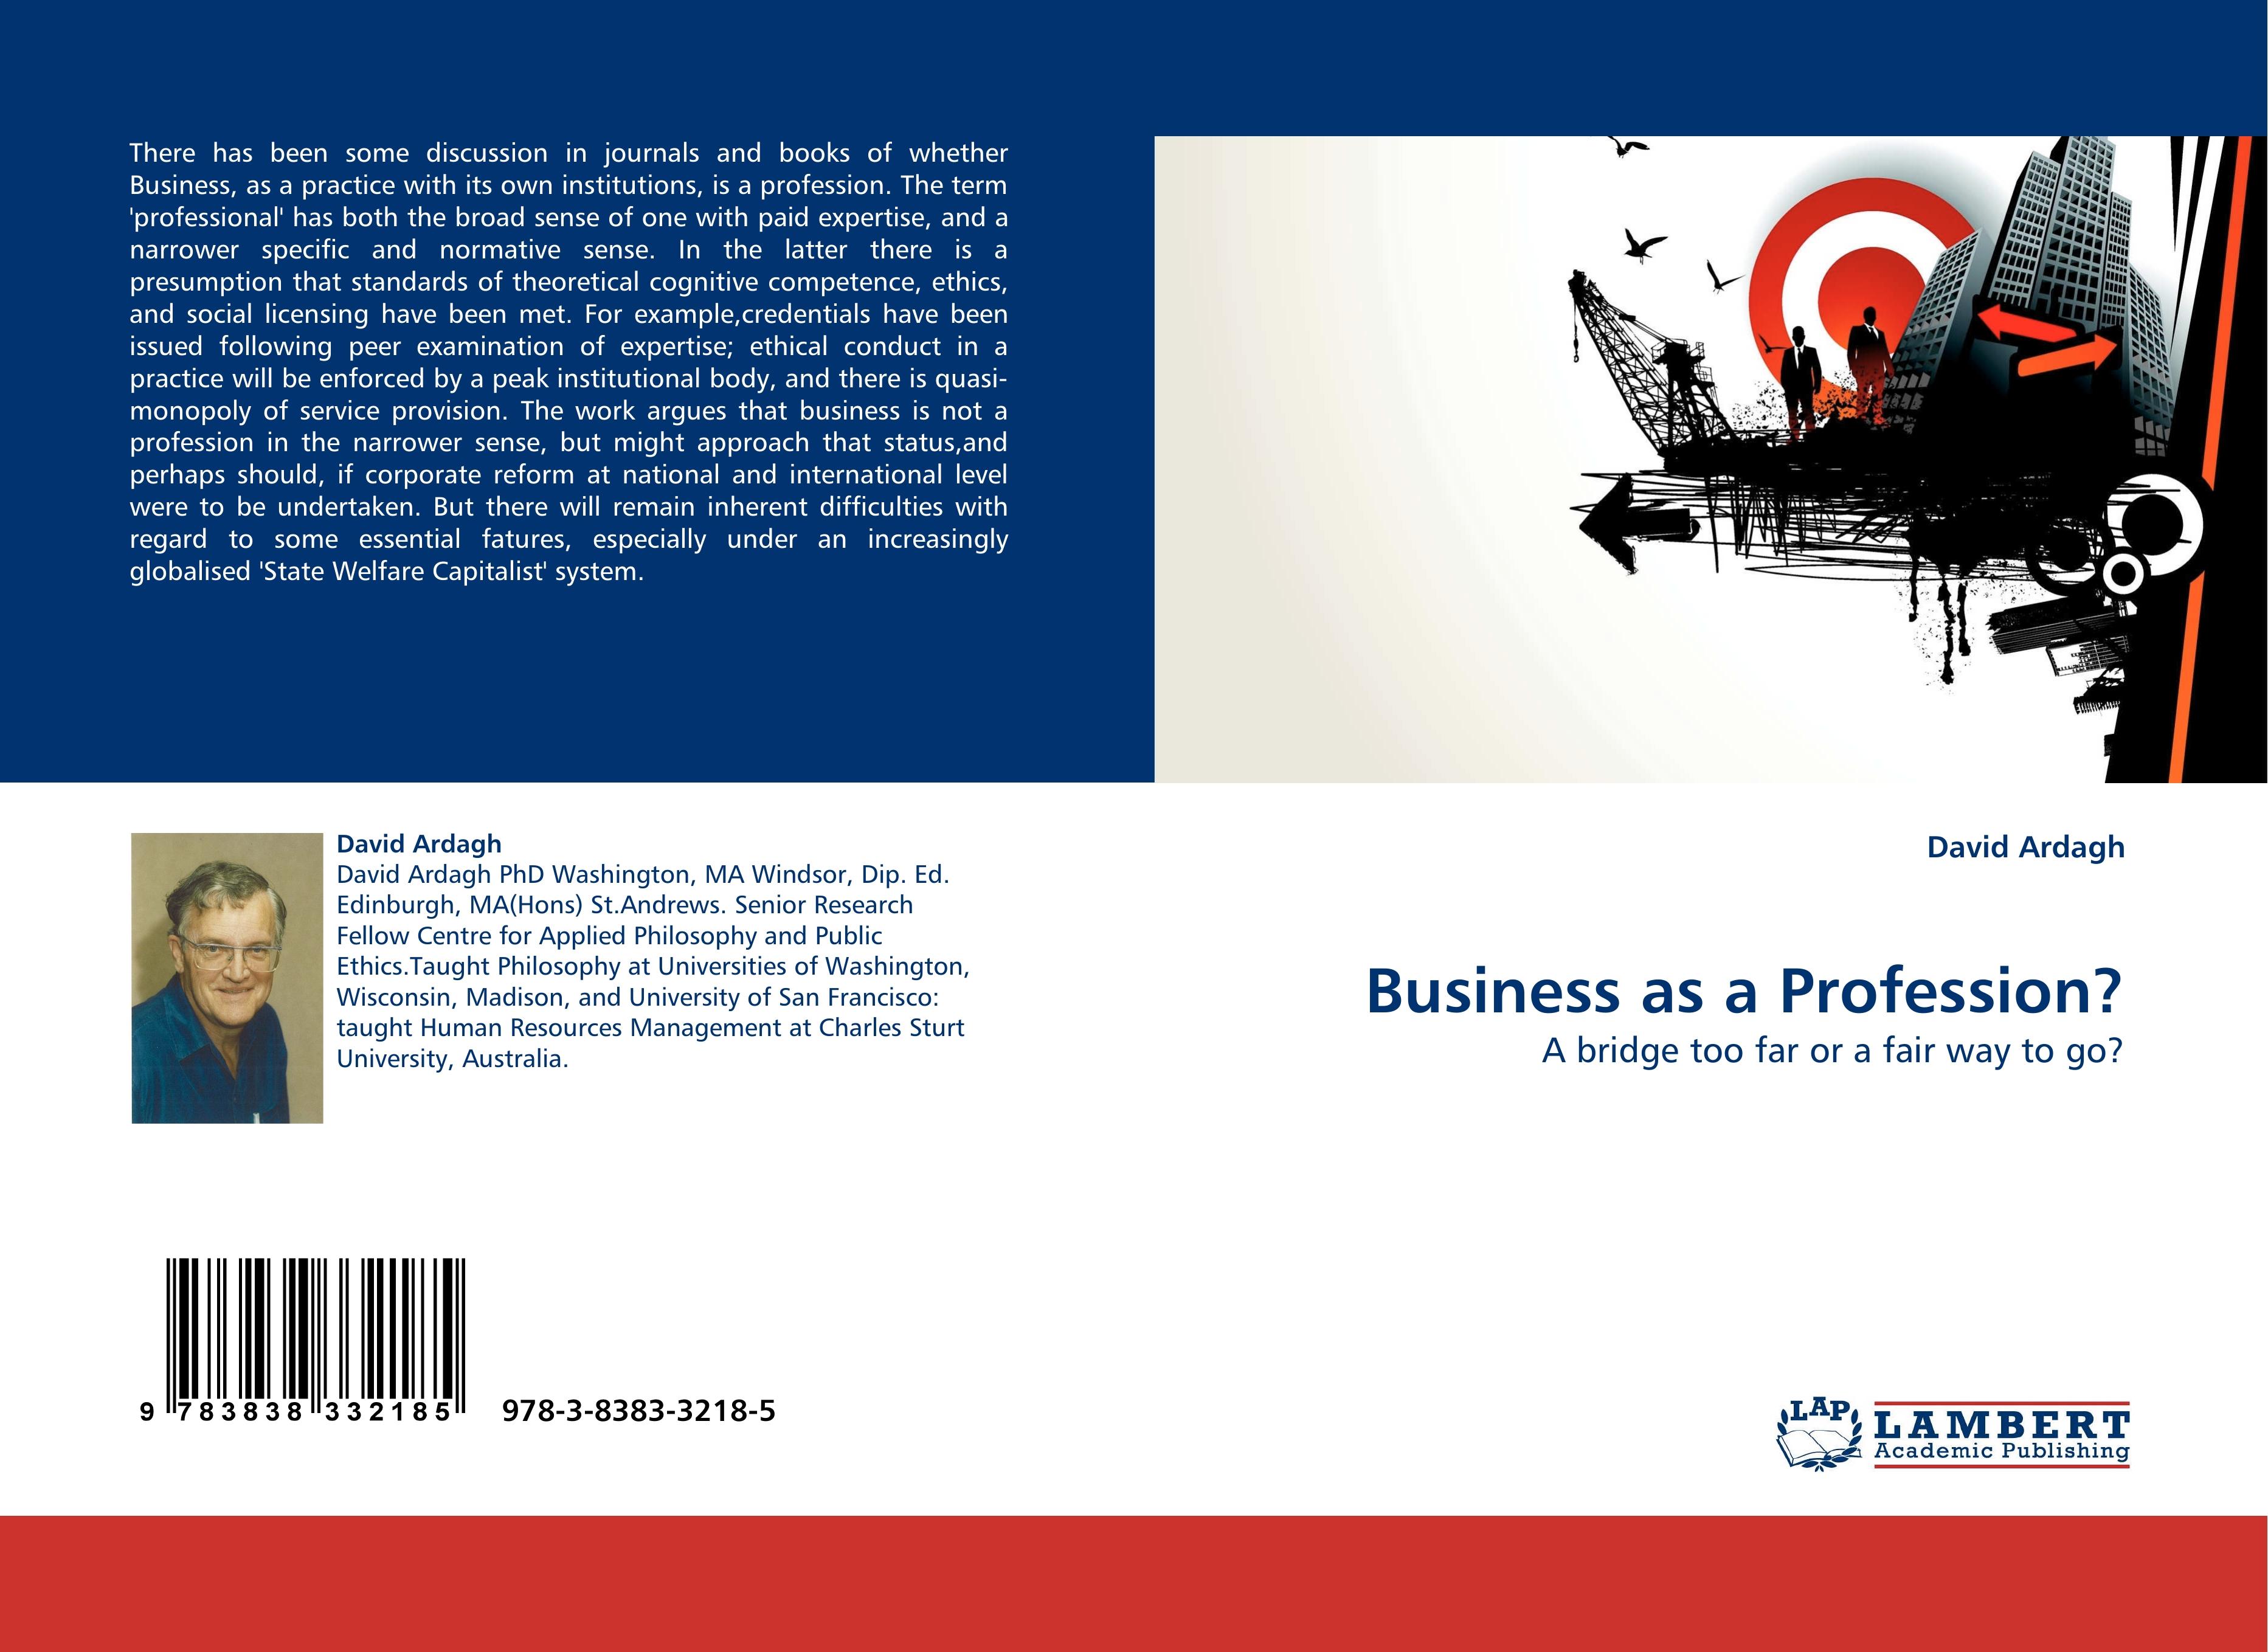 Business as a Profession? / A bridge too far or a fair way to go? / David Ardagh / Taschenbuch / Paperback / 96 S. / Englisch / 2010 / LAP LAMBERT Academic Publishing / EAN 9783838332185 - Ardagh, David